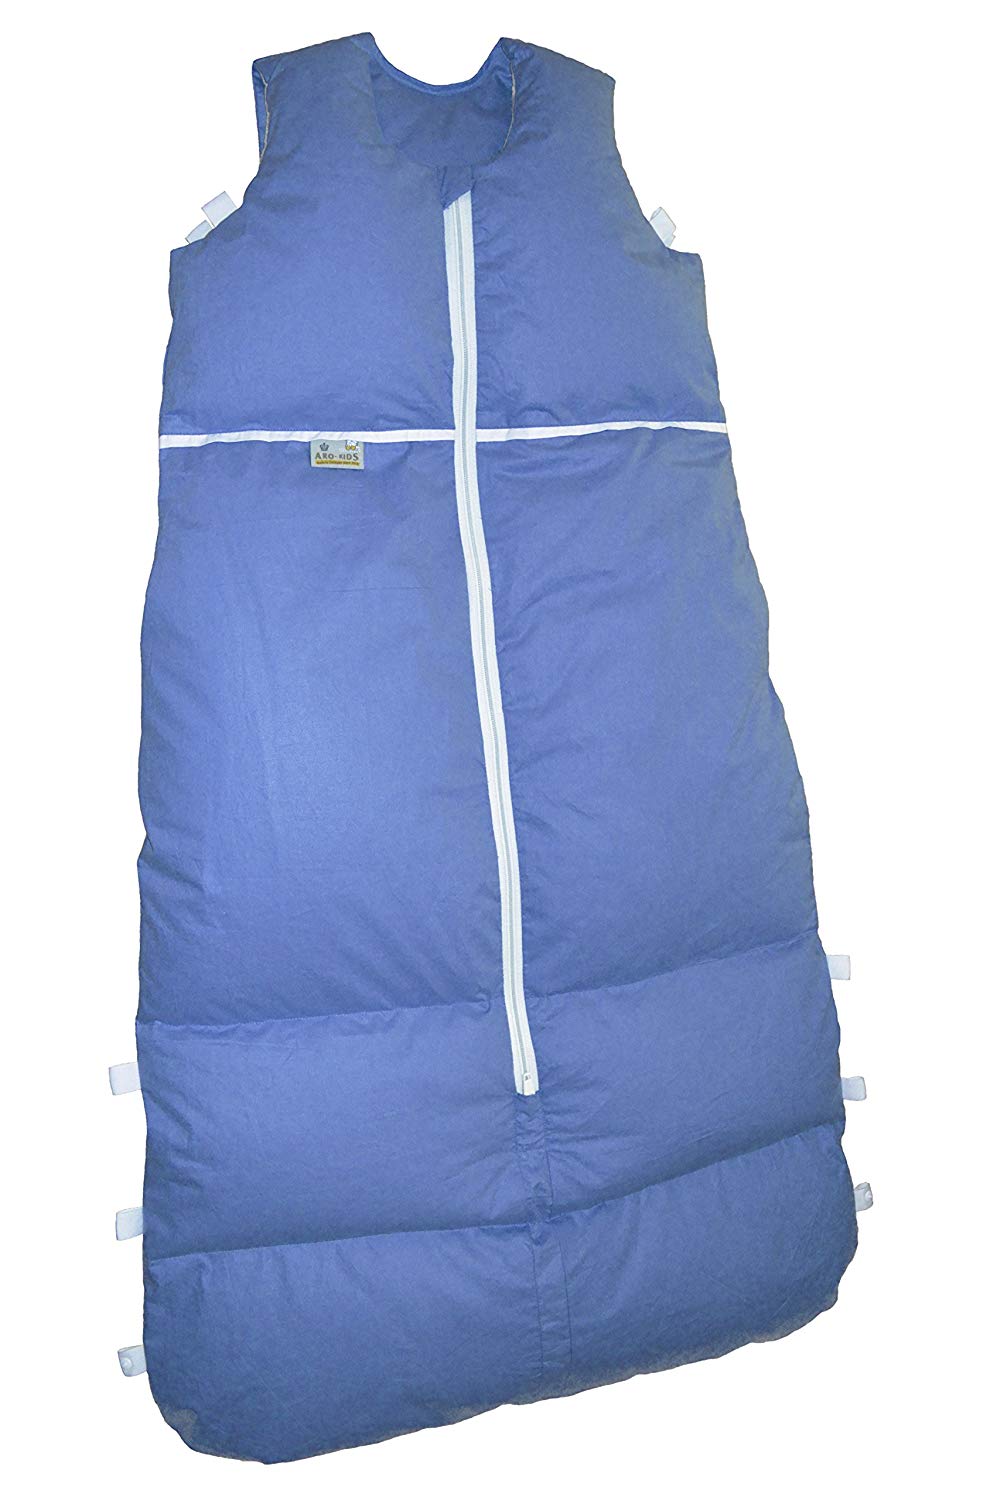 Premium Sleeping Bag Down Material, Adjustable Length, alterskl. ca 12-24 Months, Azure Blue, 110 cm